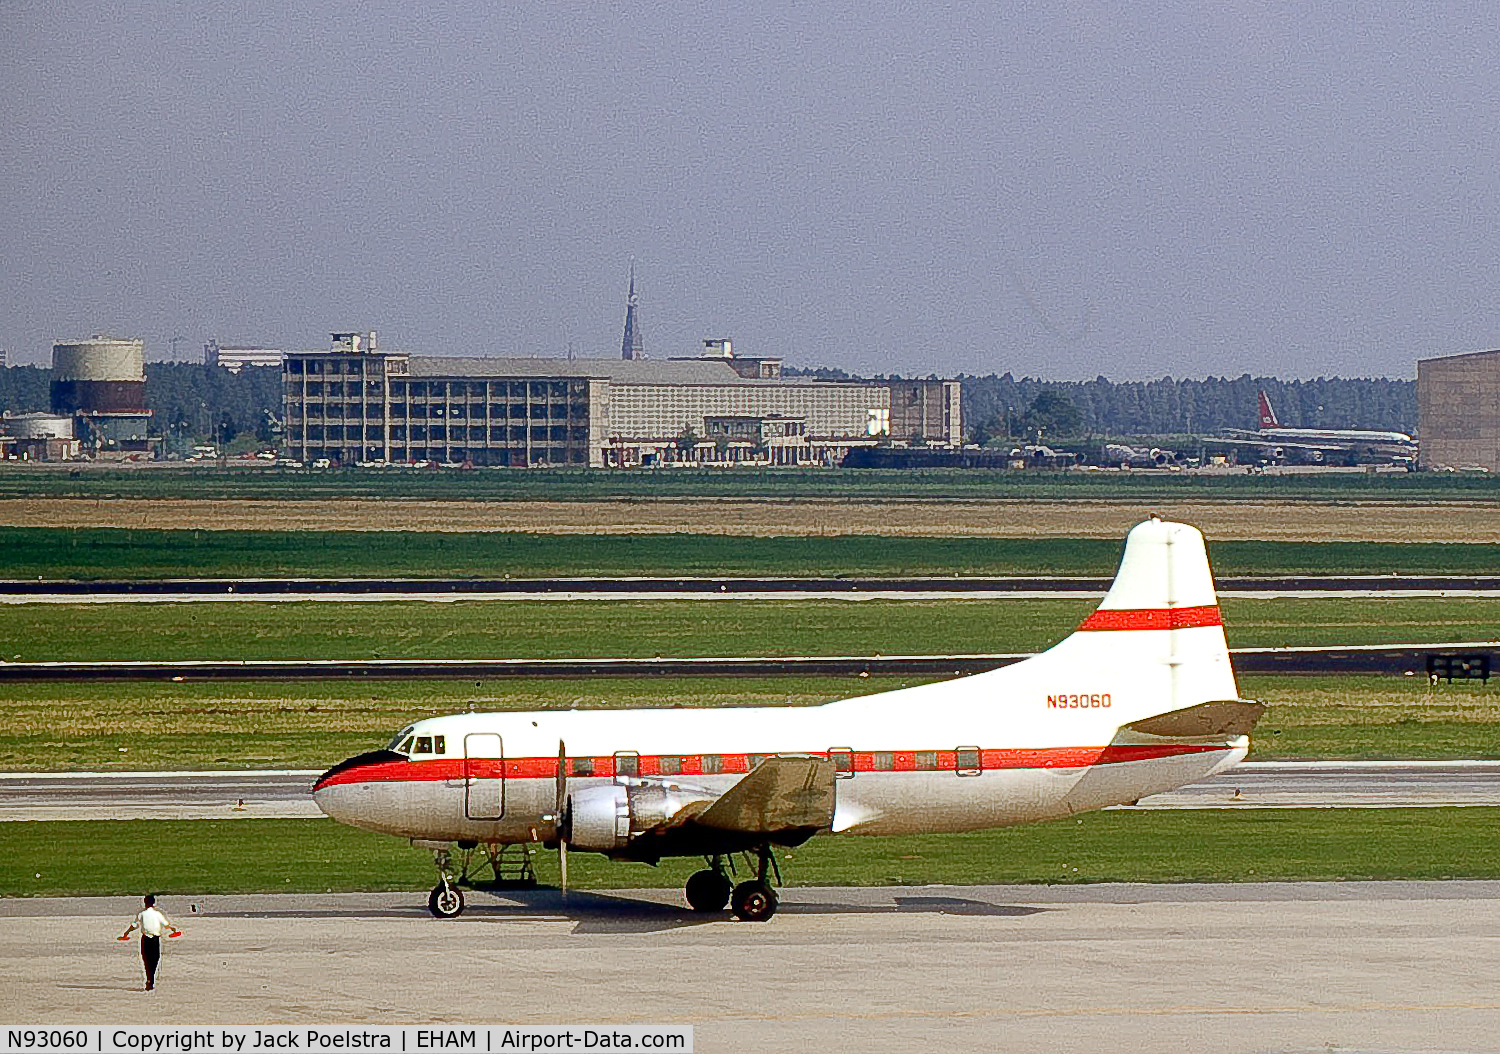 N93060, 1948 Martin 202 C/N 9149, N93060 at Amsterdam airport